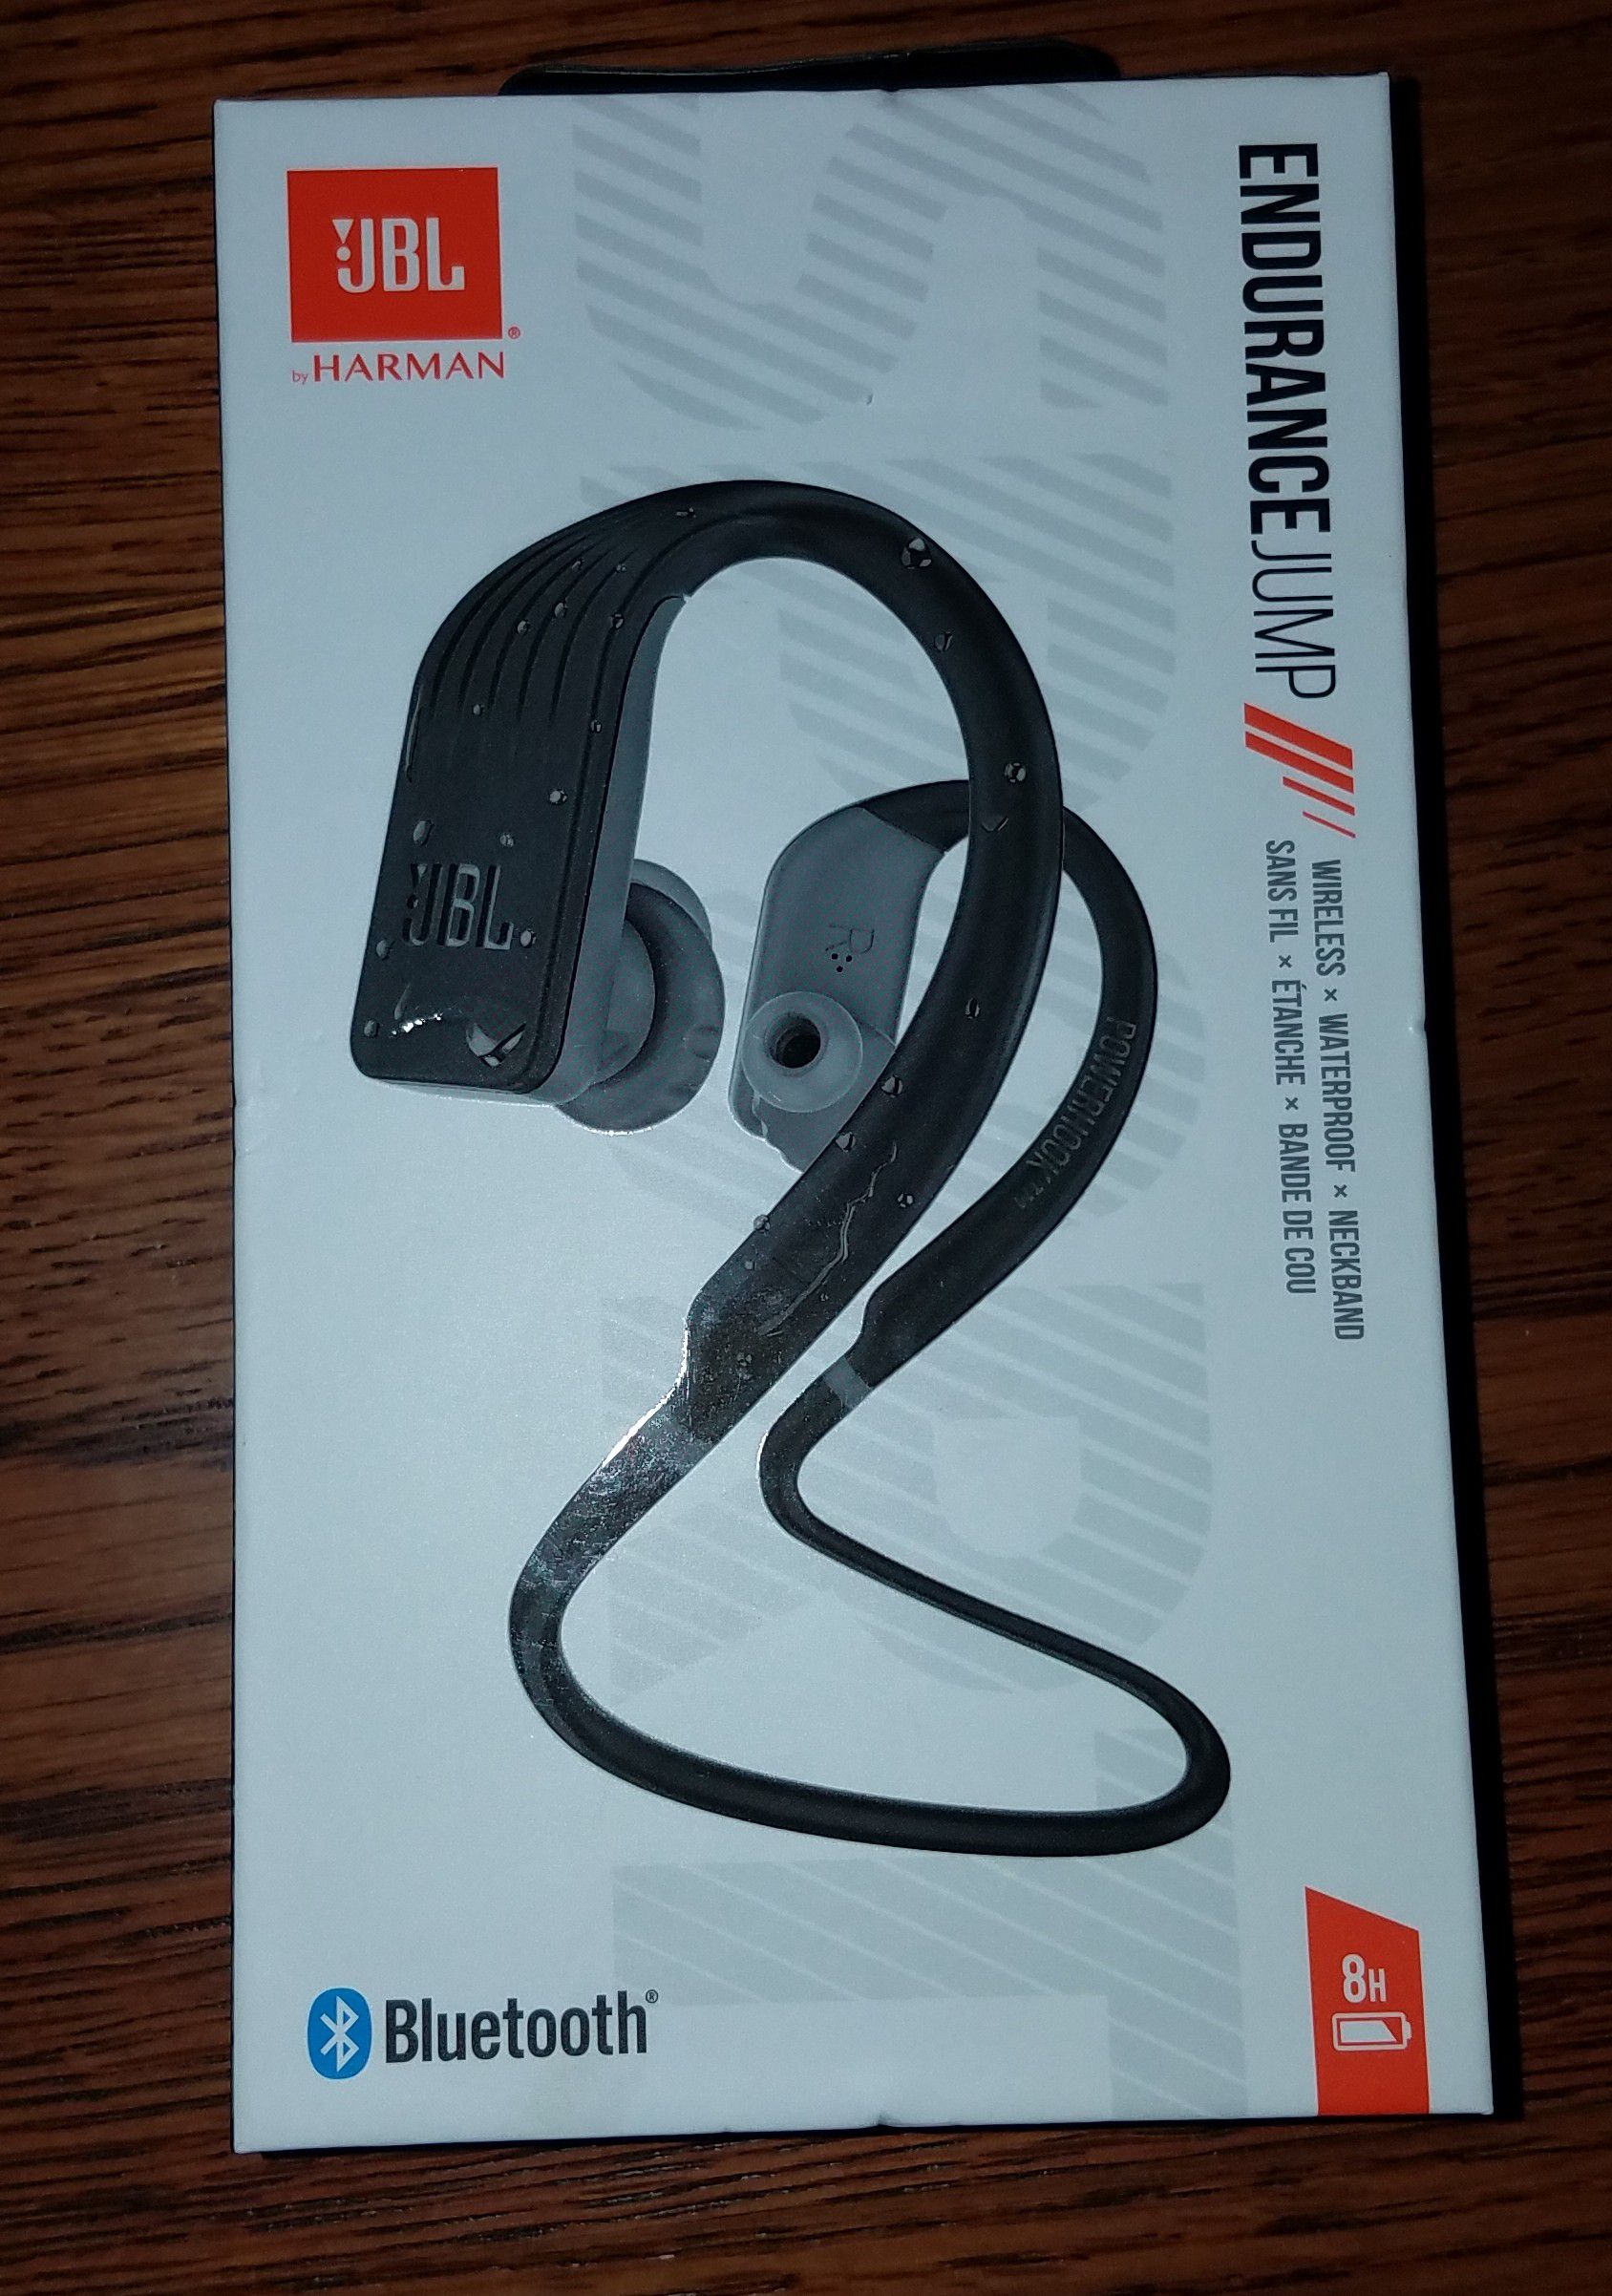 Brand New JBL Endurance Jump Wireless Bluetooth Headphones - Waterproof - 8hr Battery Life - Brand New in the Box, Sealed